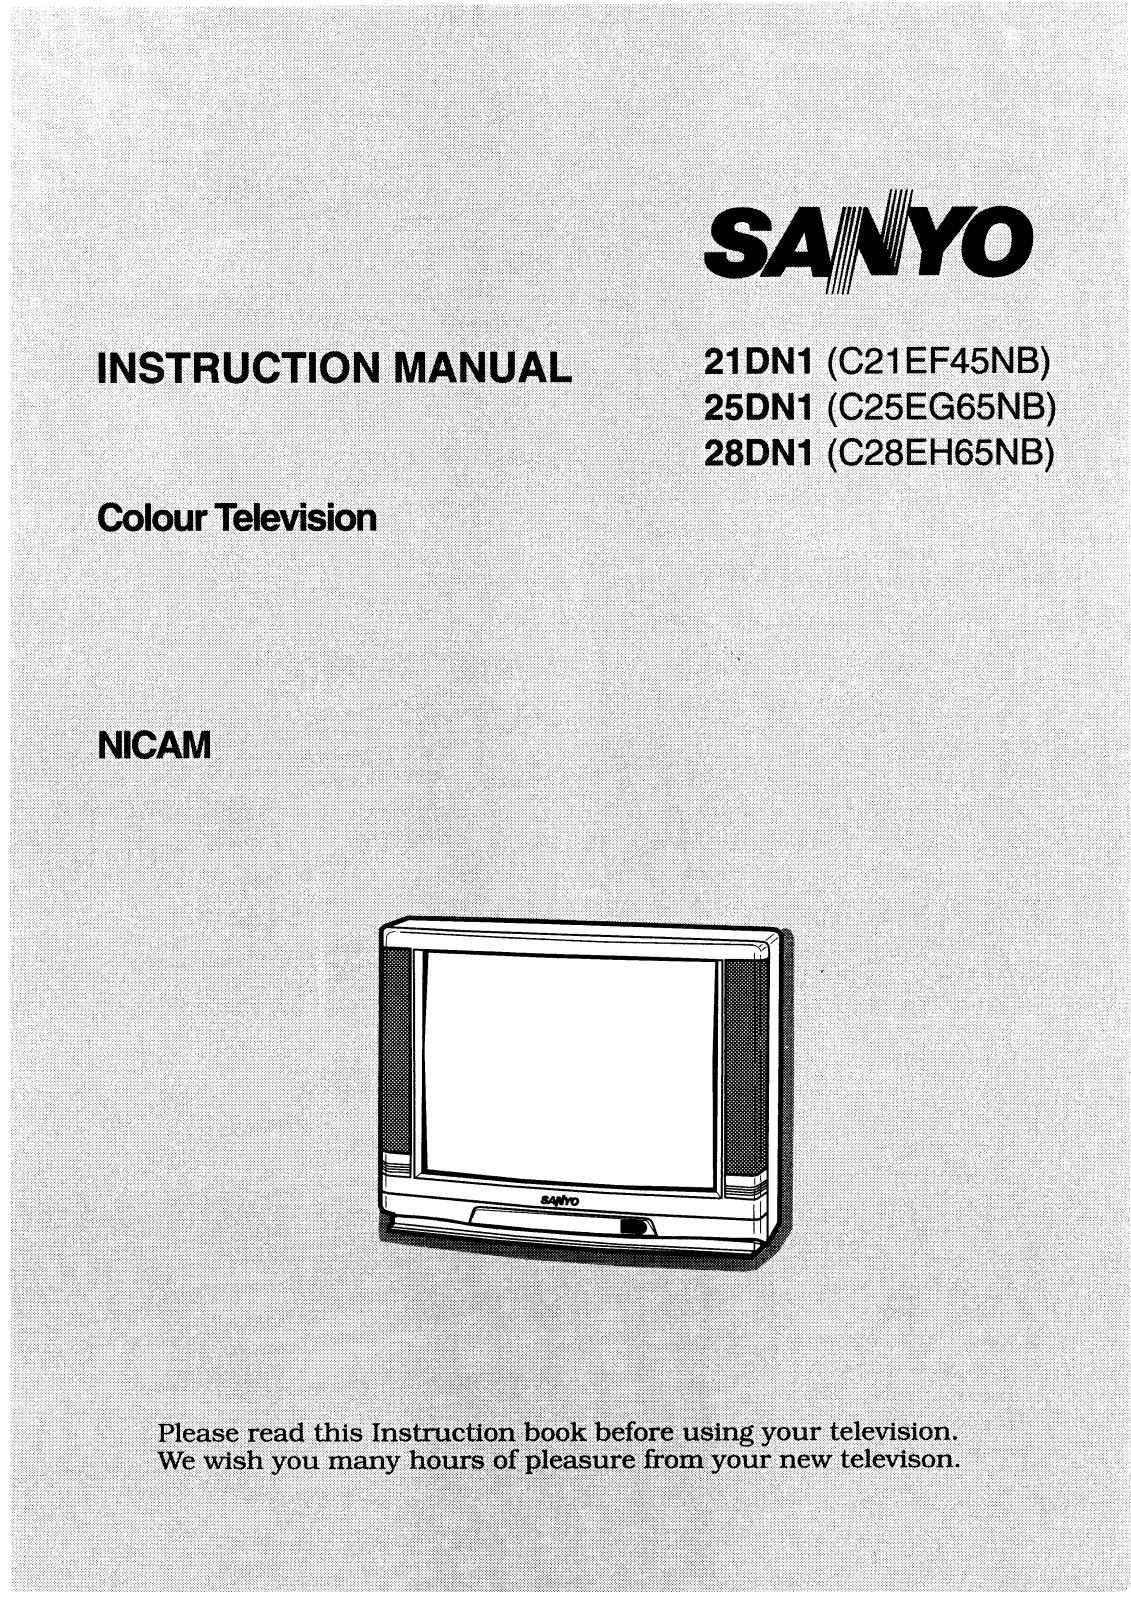 Sanyo 21DN1, 25DN1, 28DN1 Instruction Manual